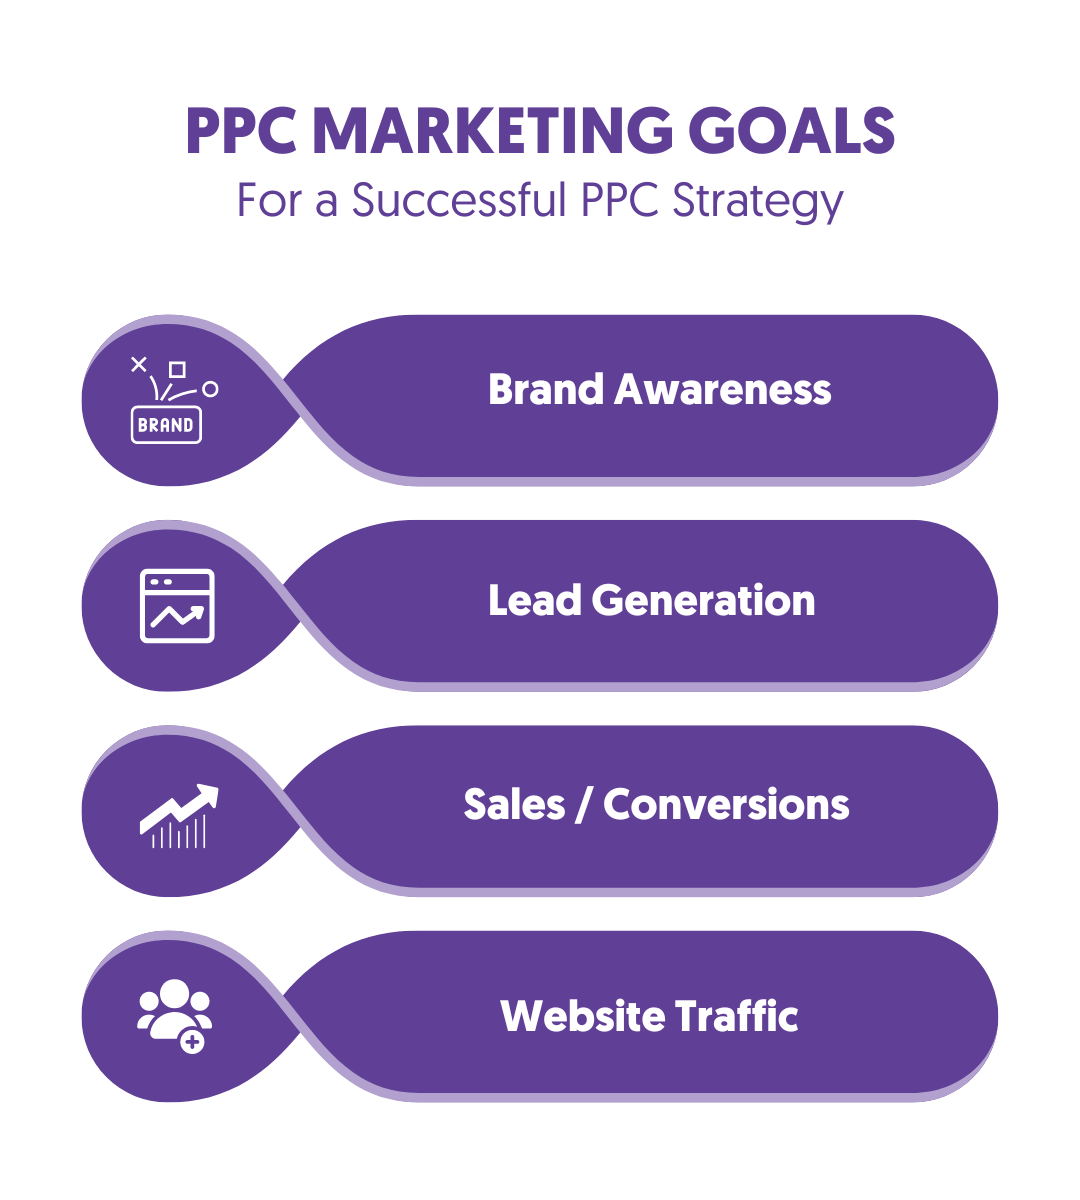 Common PPC Marketing Goals